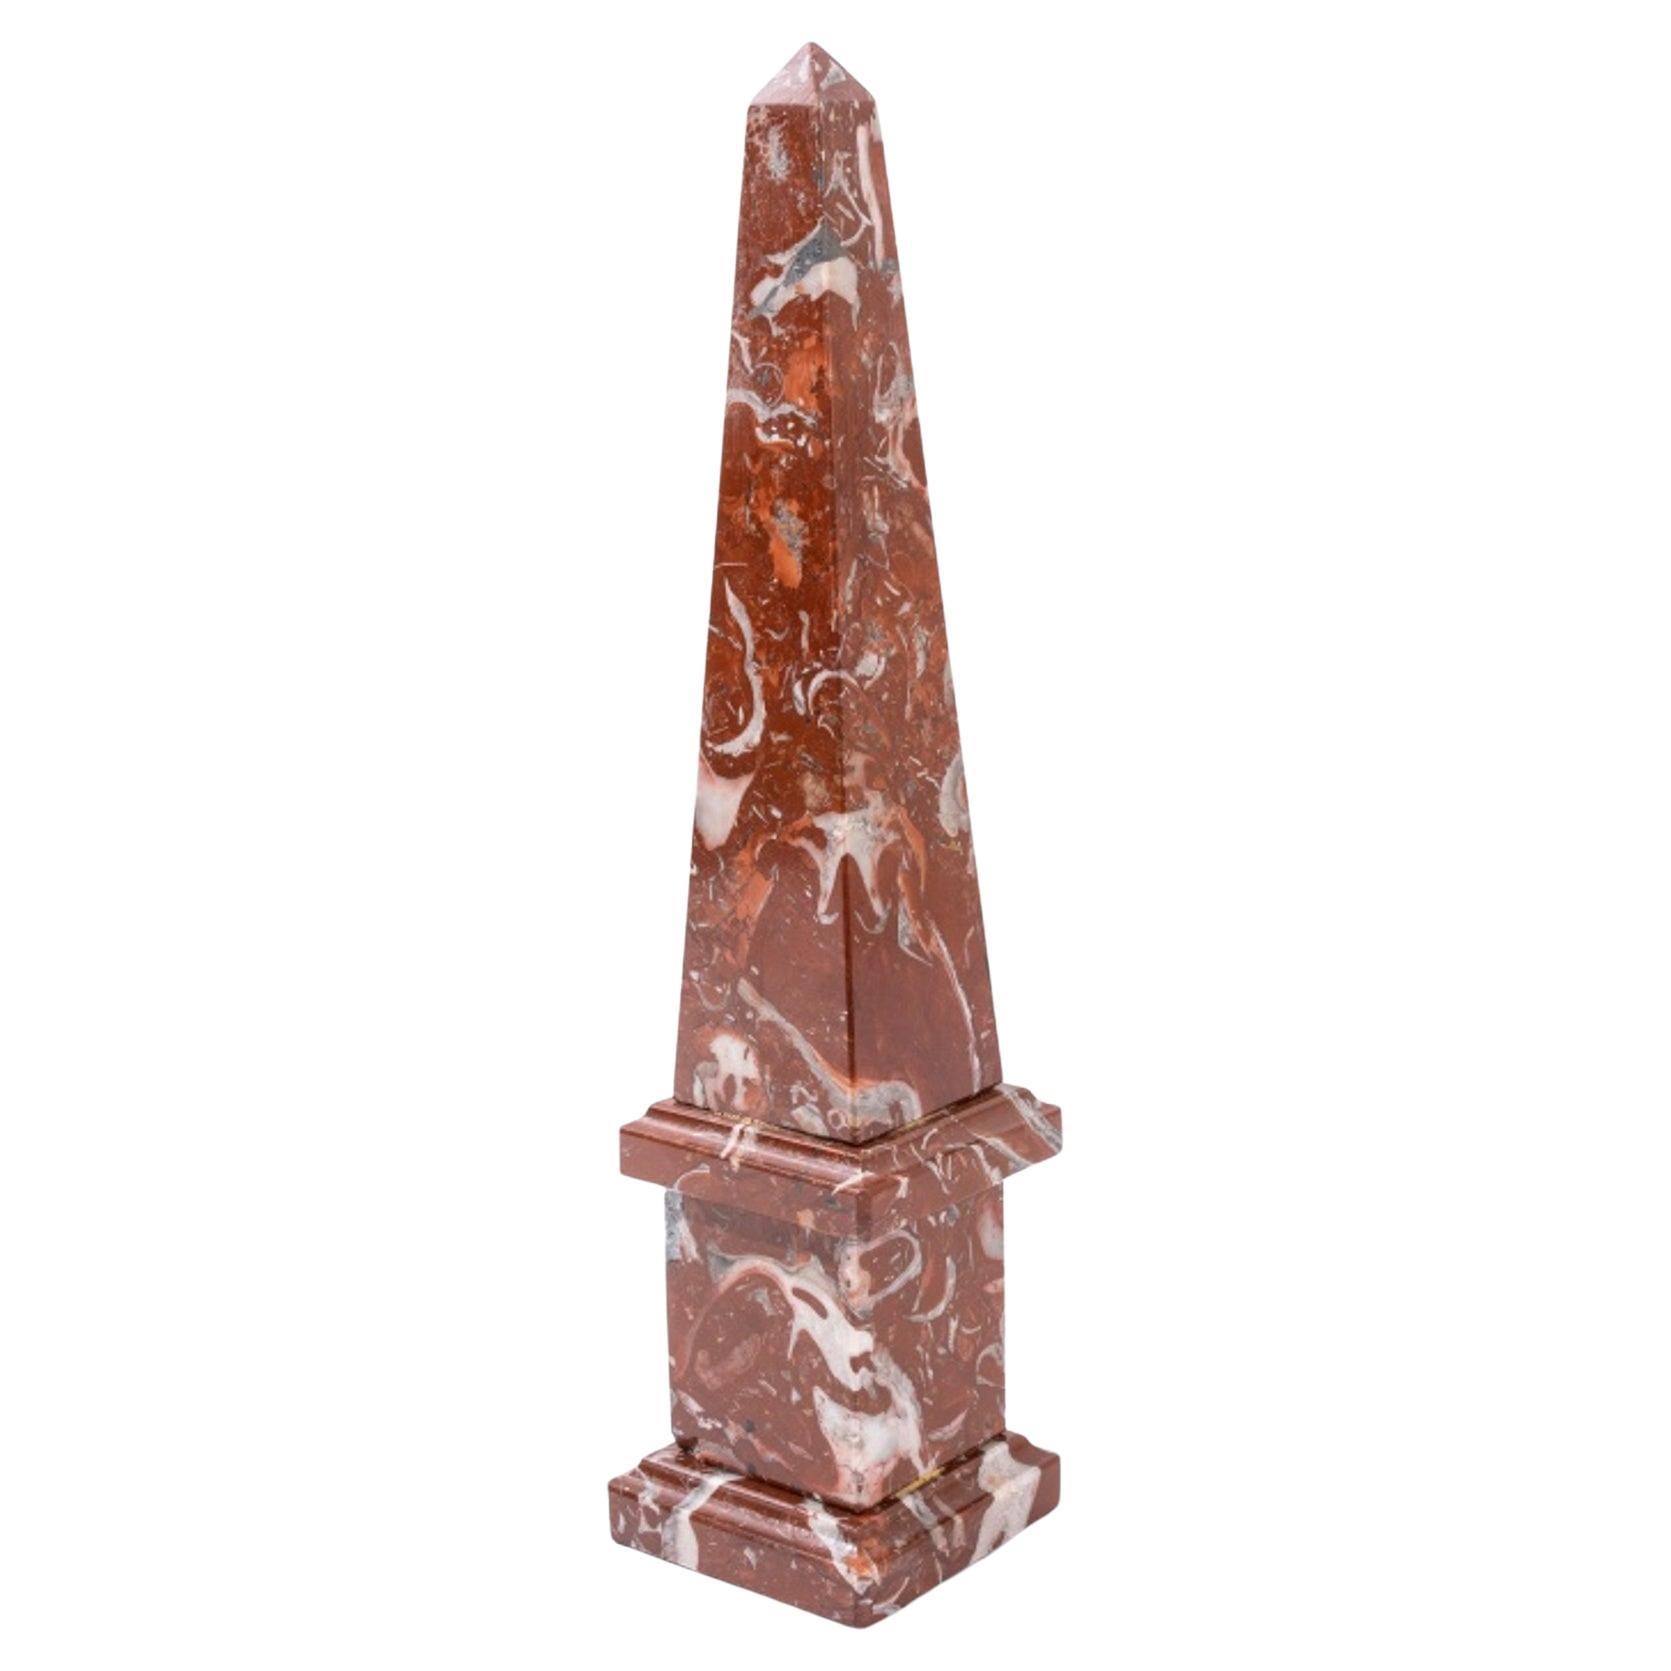 Grand Tour Obelisk aus rotem Jaspismarmor im Grand Tour-Stil